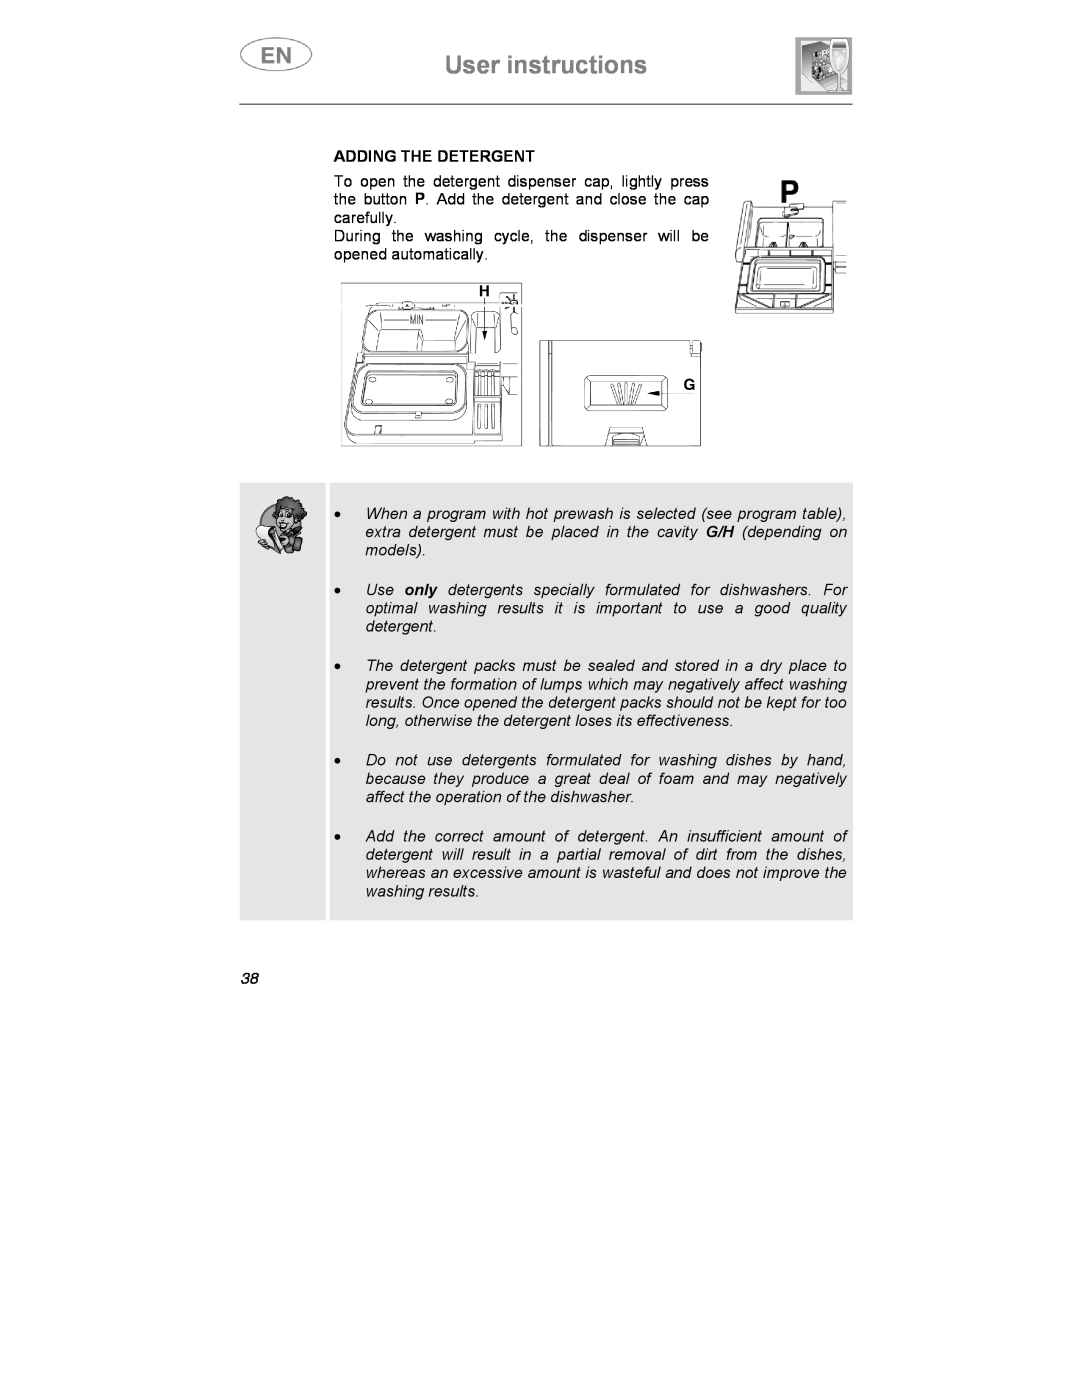 Smeg KS60-2, KS60-3T instruction manual User instructions, Adding The Detergent 